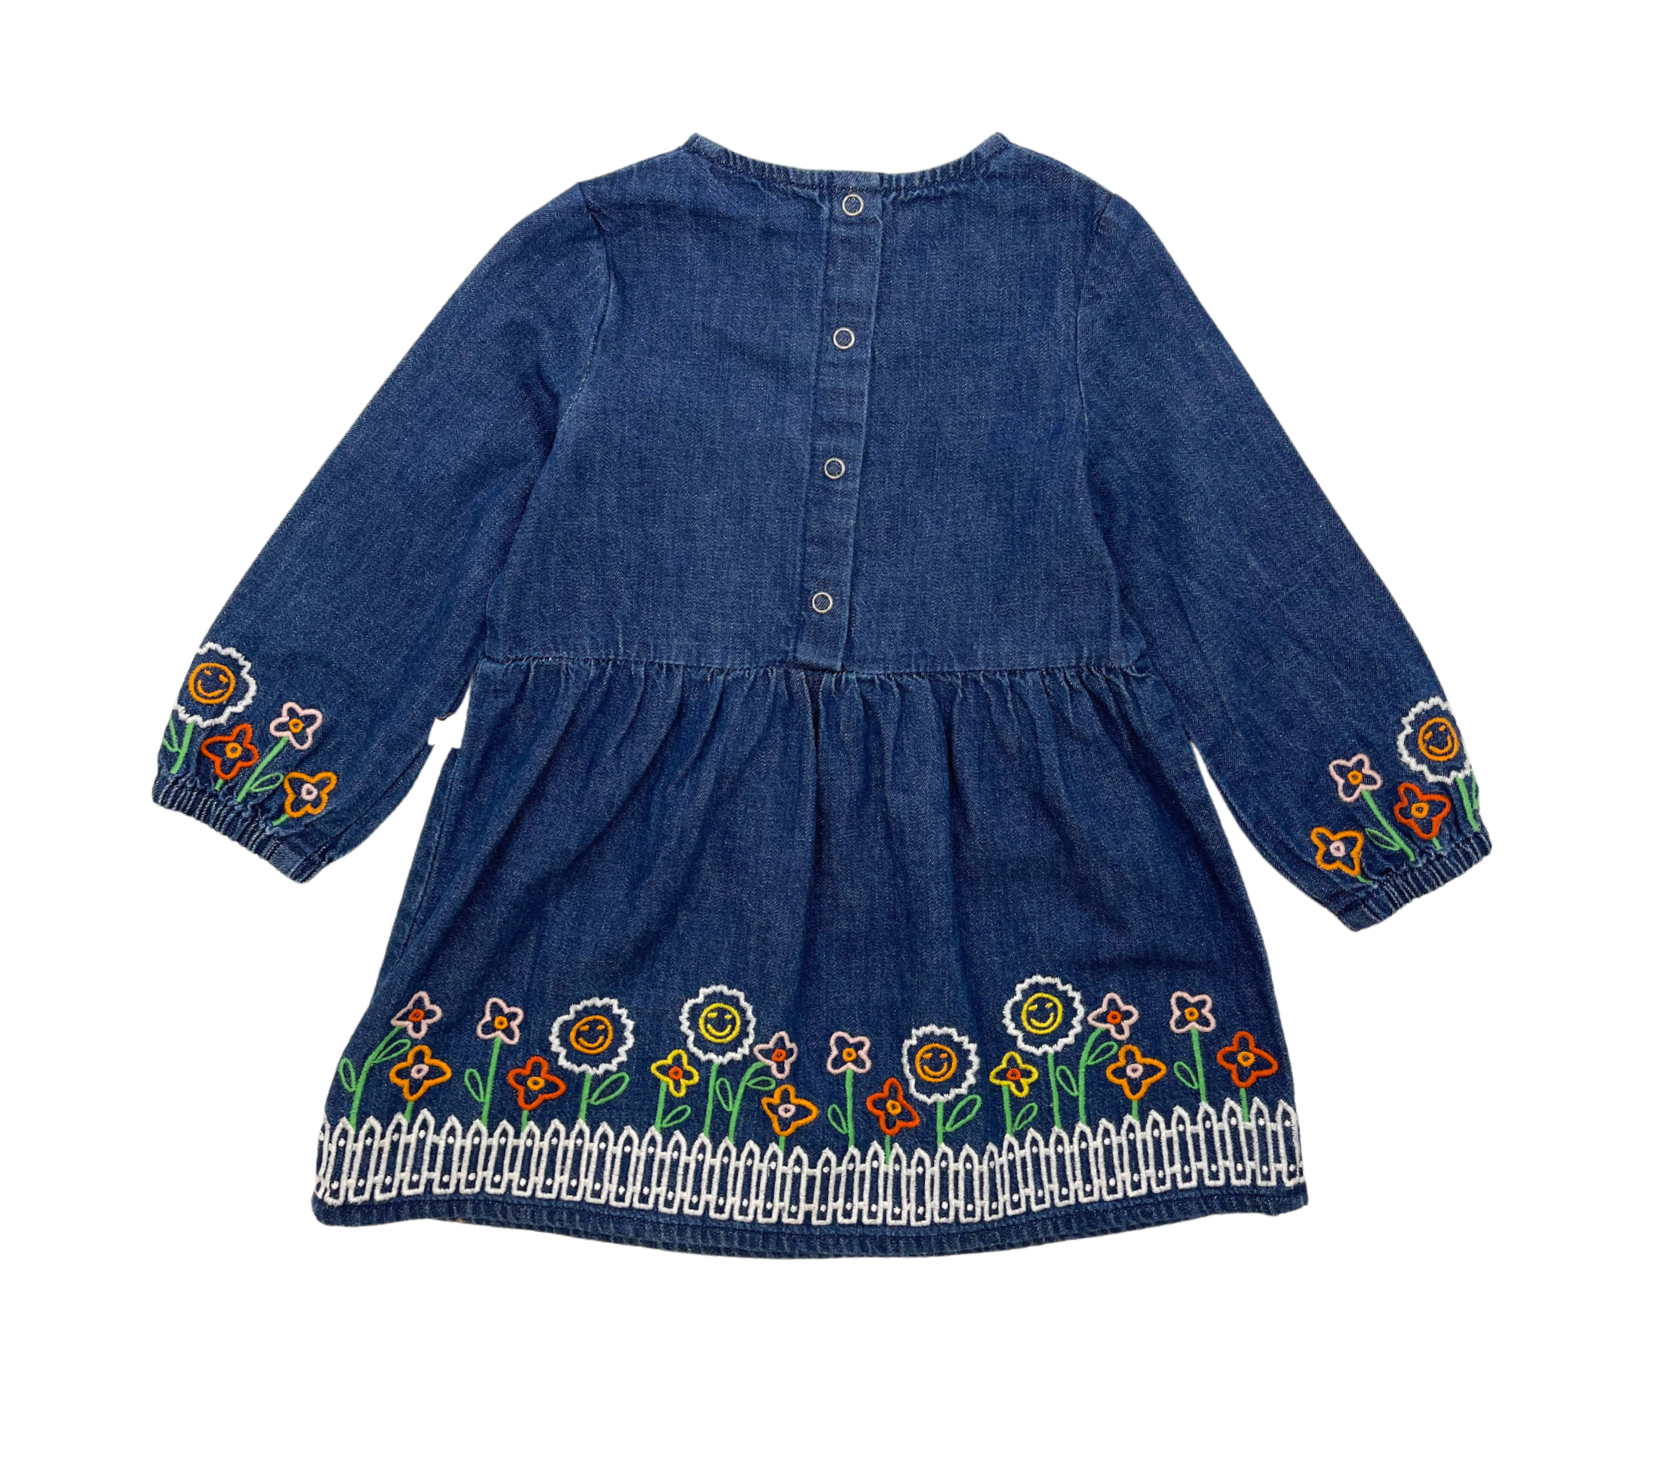 STELLA MCCARTNEY - Flower embroidery denim dress - 18 months